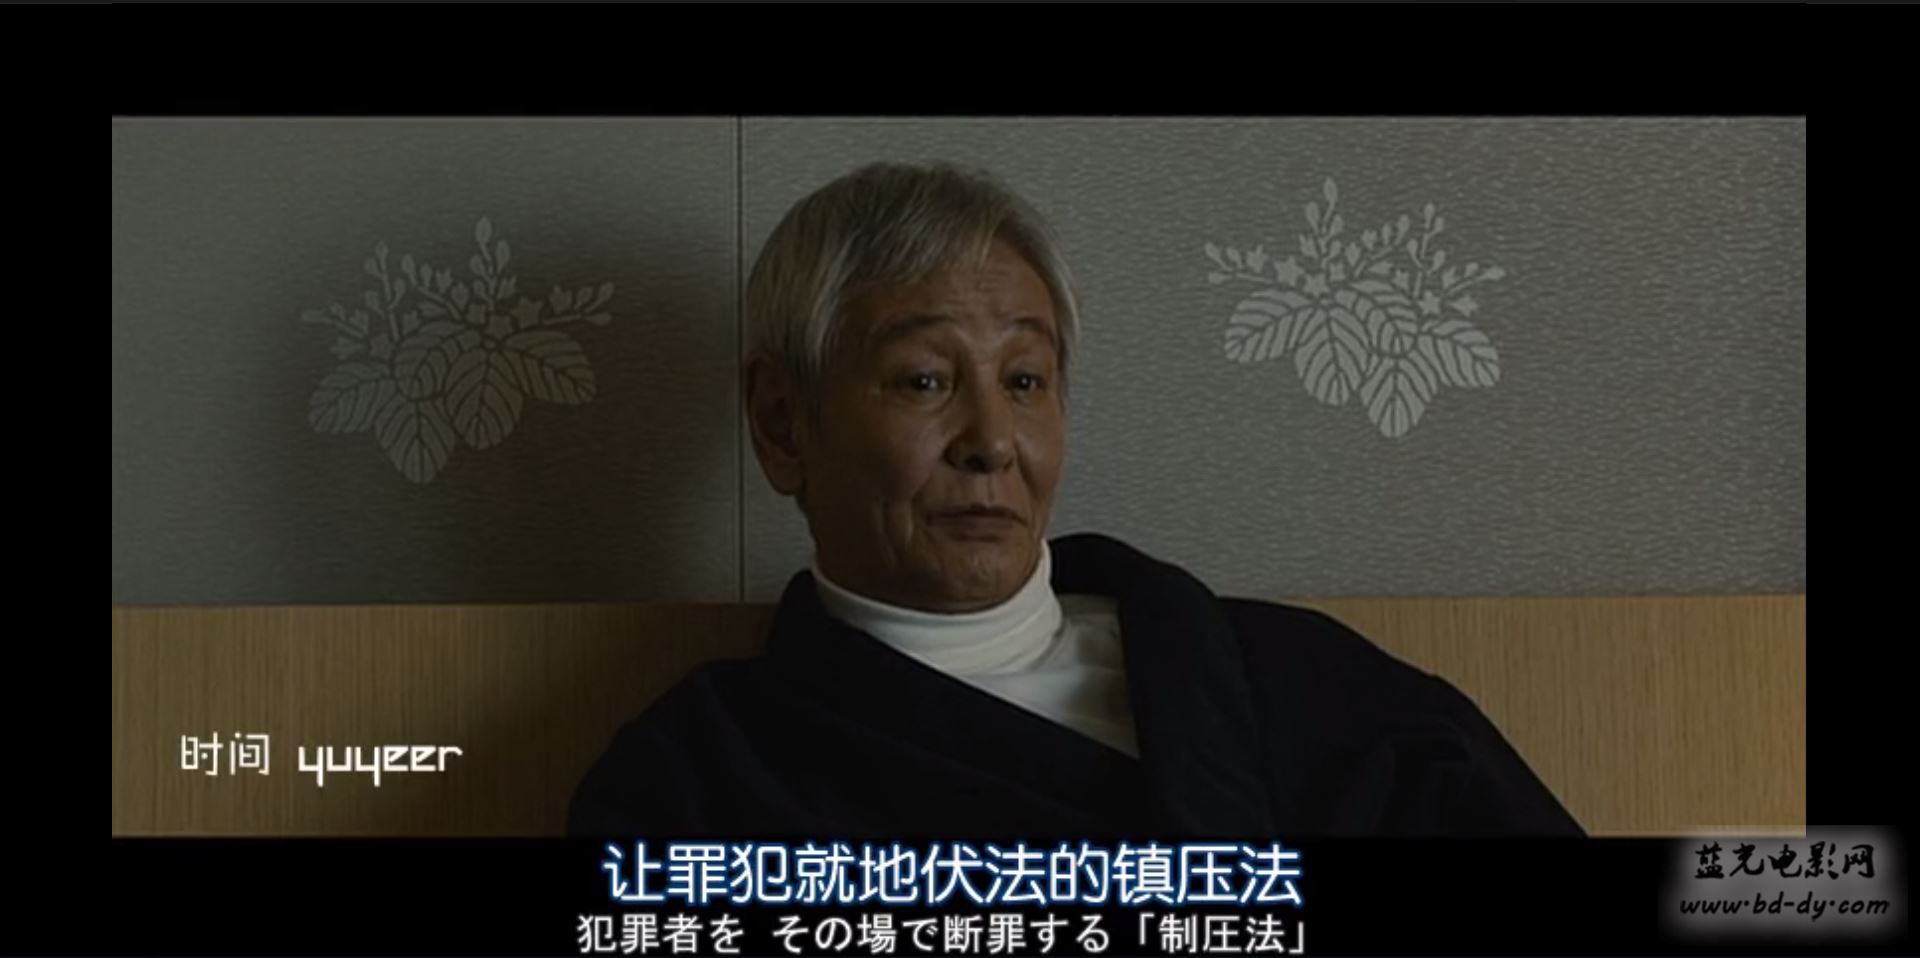 《S-最后的警官 电影版》2015日本动作犯罪.DVD.中日双字截图;jsessionid=uQwRFrFYoywDEZ48vpaHVicj_aCCVx5zlH8A1rpY